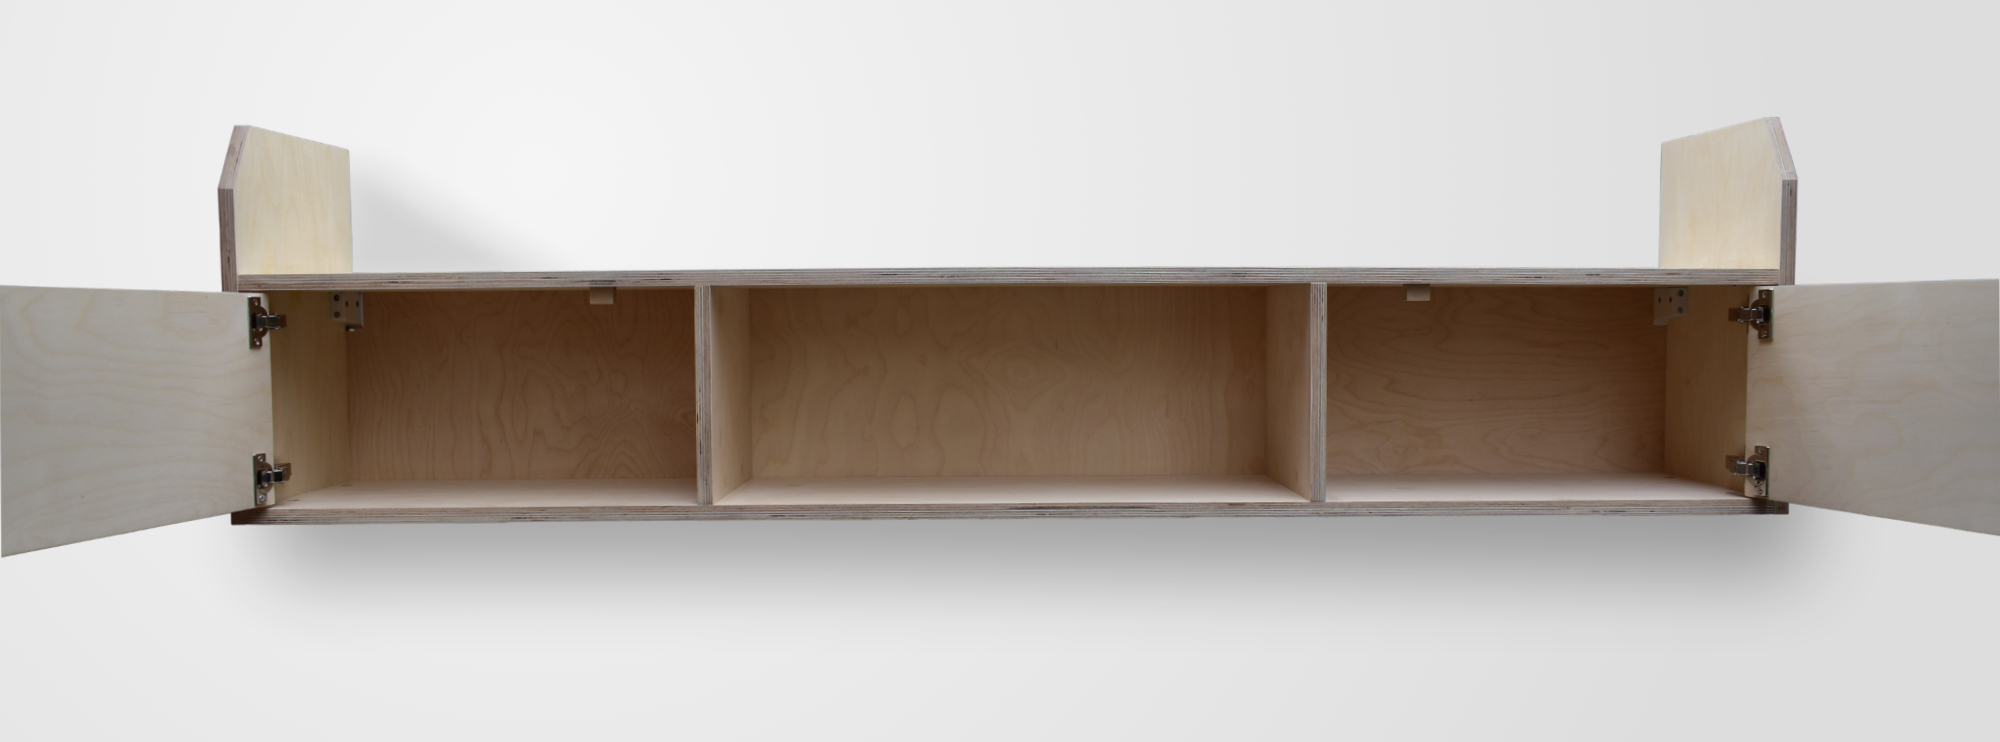 Mmh Furniture 'Horizontal' cabinet birch plywood cabinet doors open